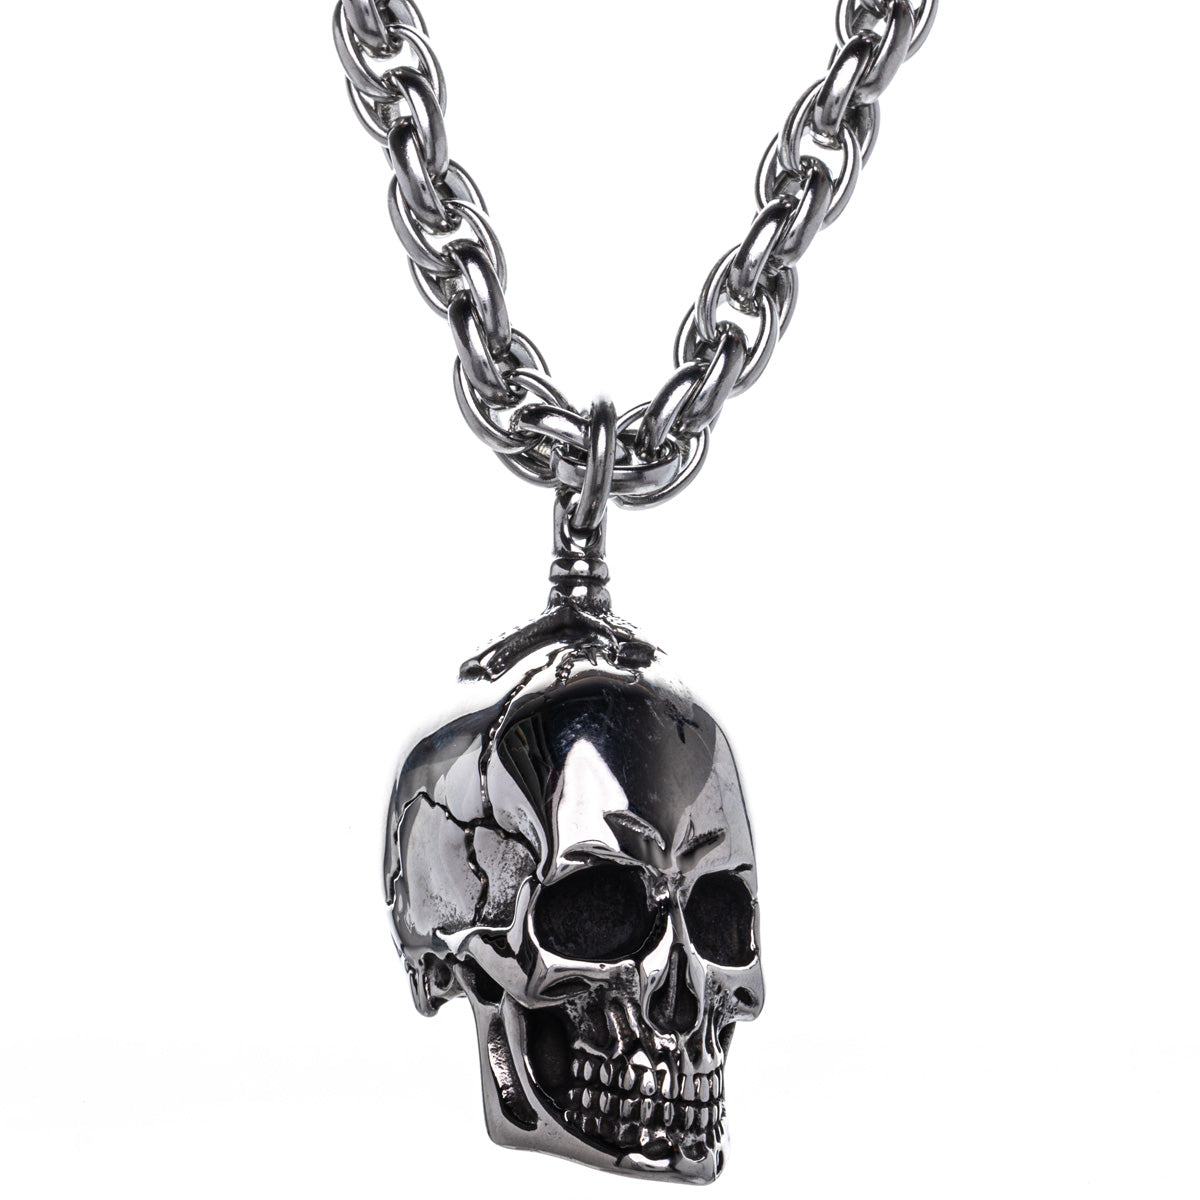 Rock-style skull pendant necklace (Steel 316L)